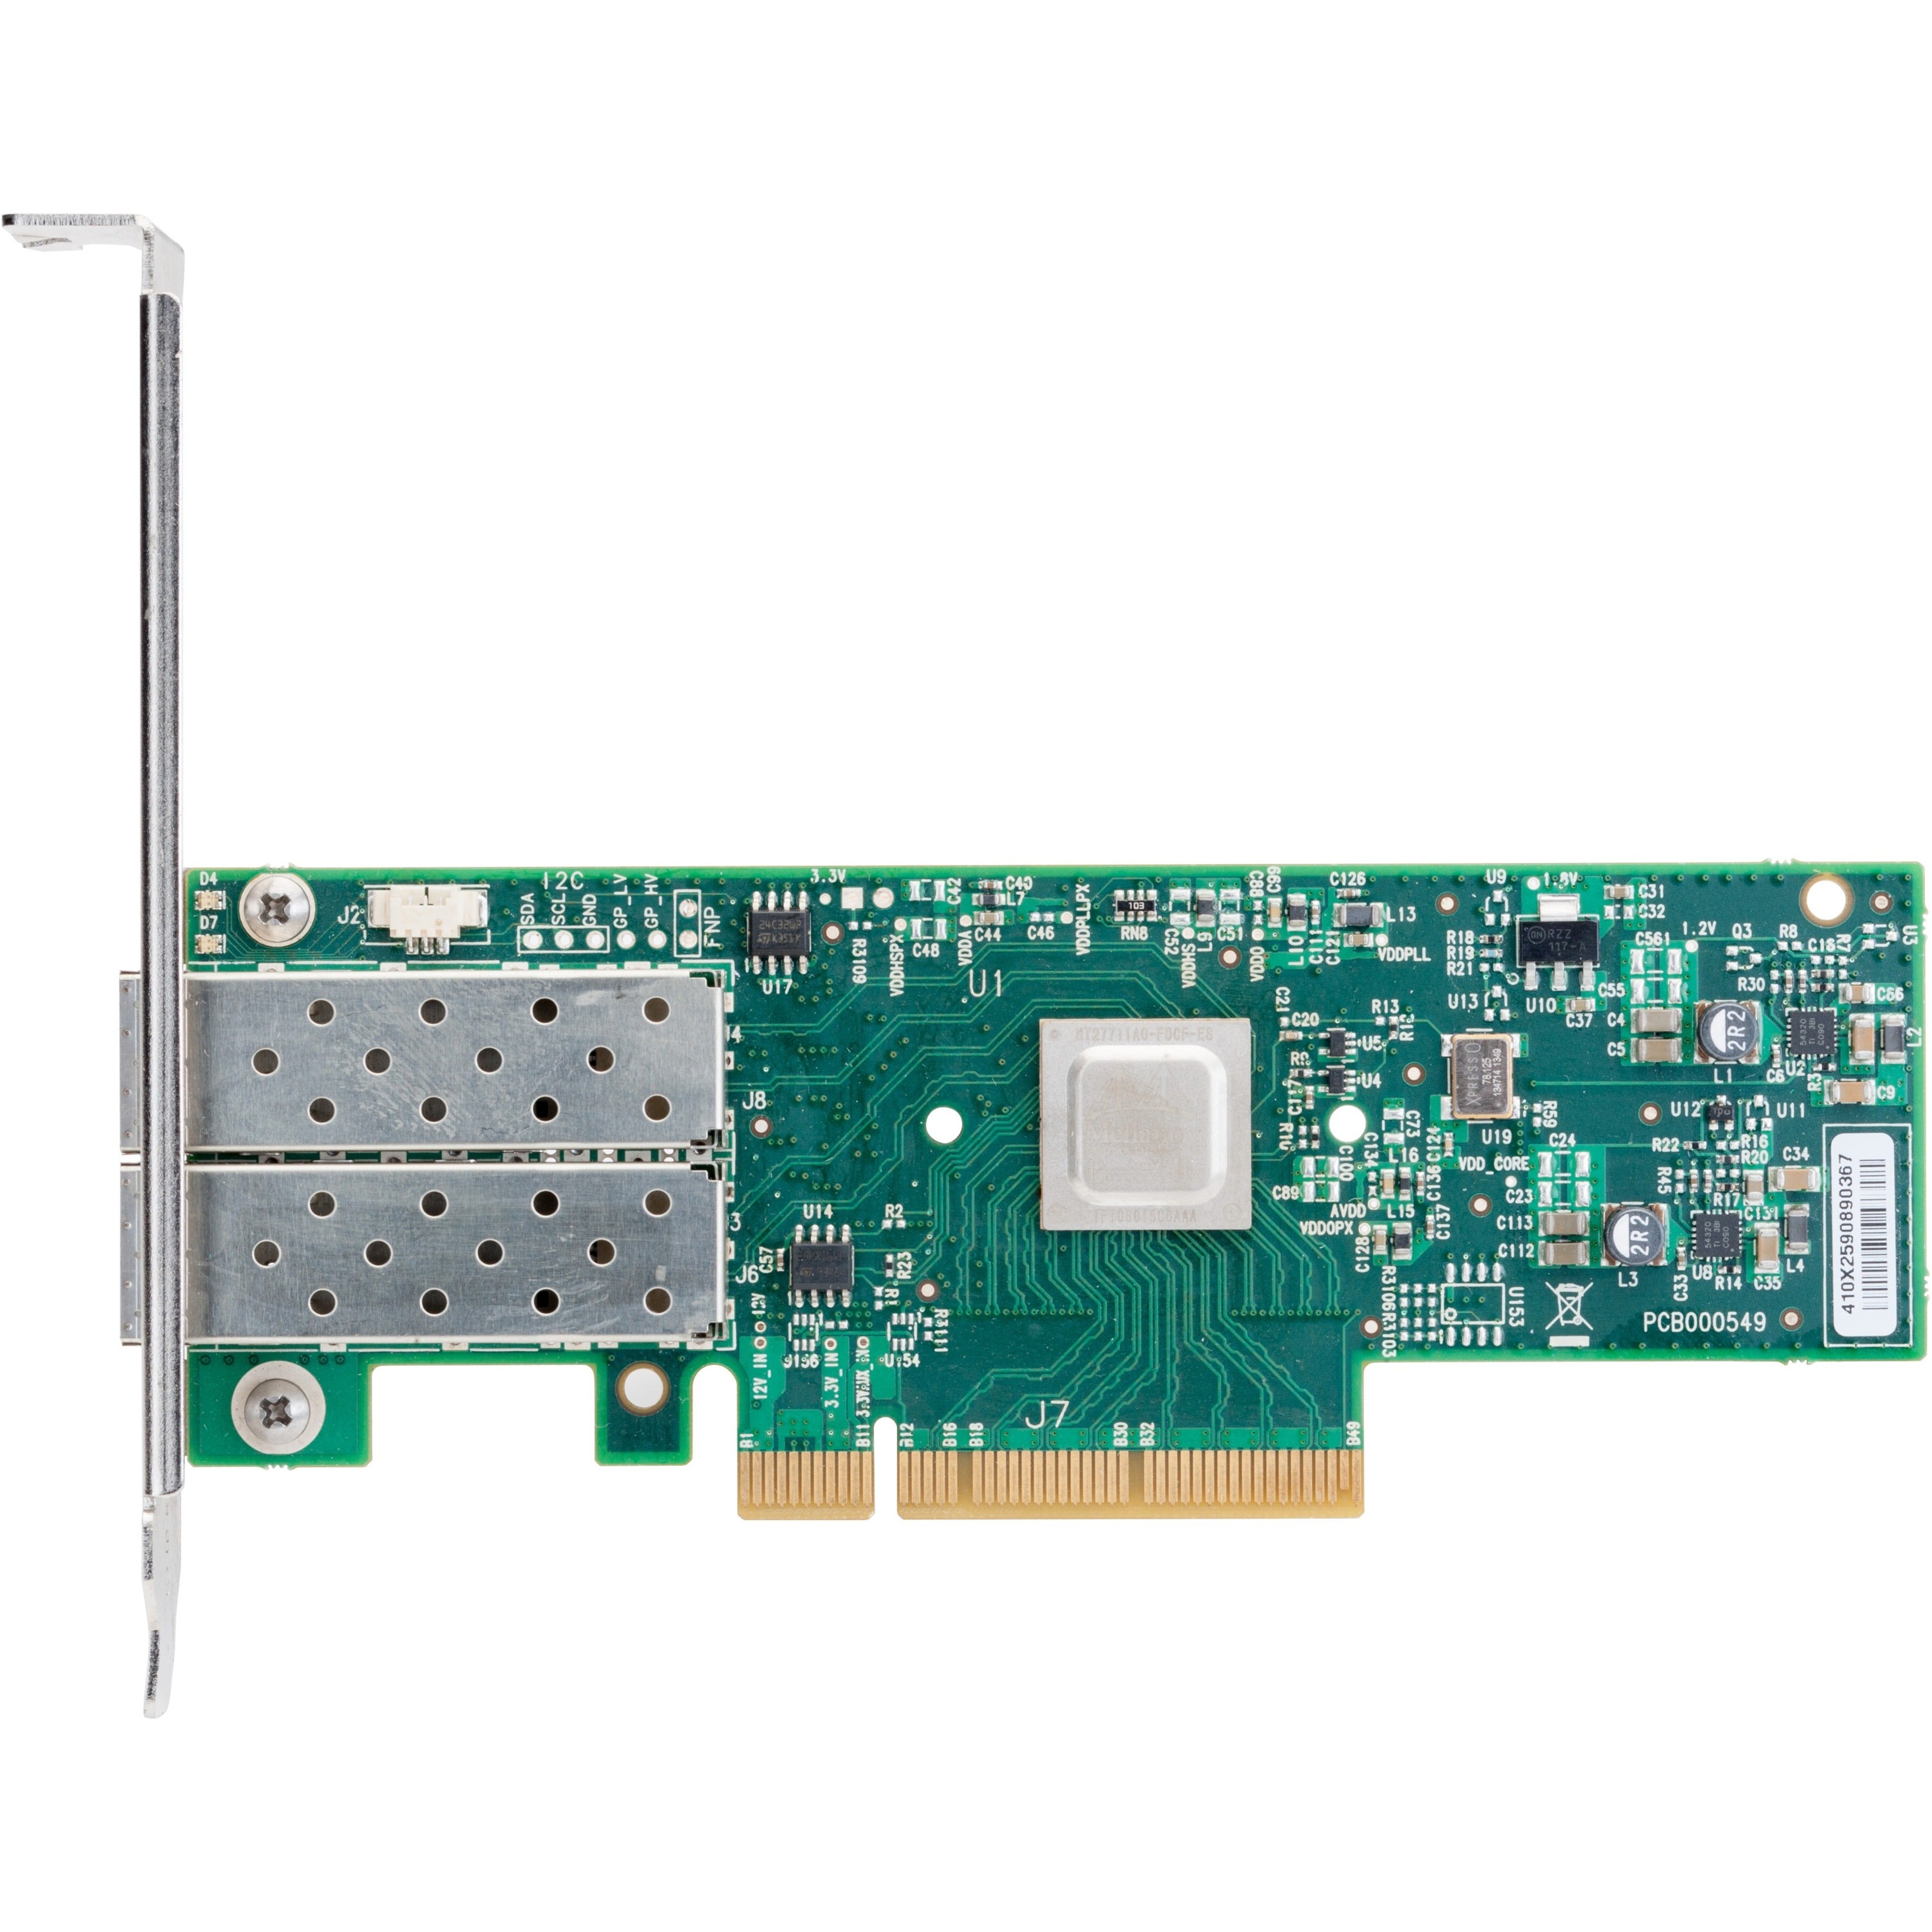 NVIDIA MCX4121A-ACAT ConnectX-4 Lx EN Adapter Card 25GbE, 25Gigabit Ethernet Card